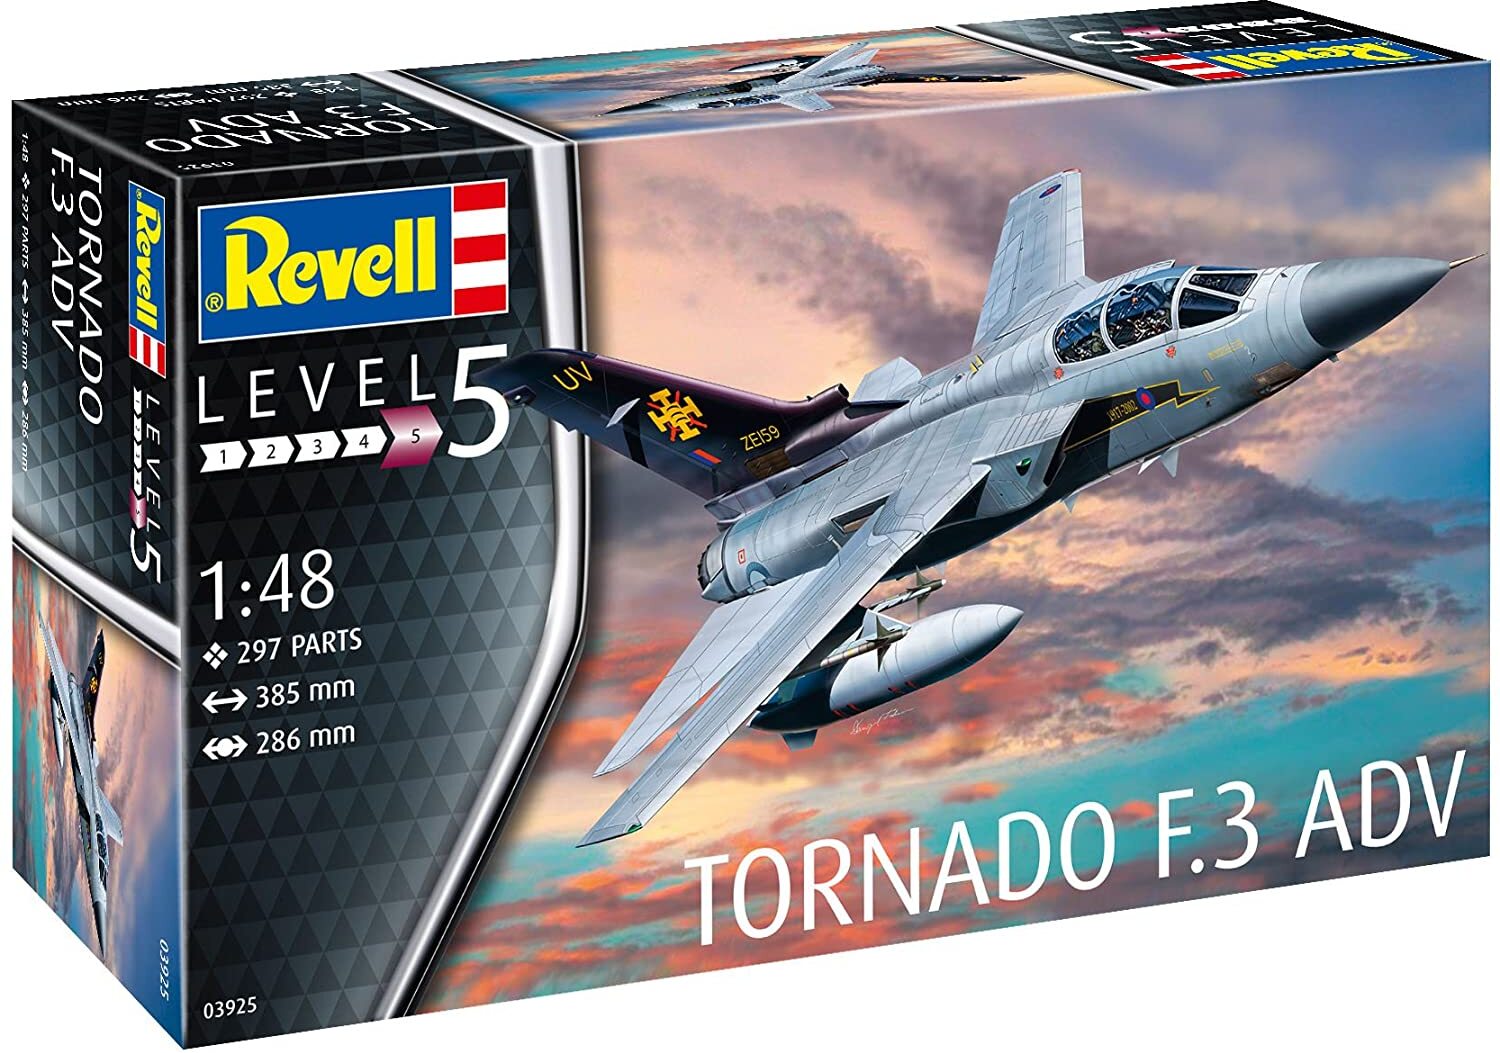 Revell REV-03943 14 Modelmaking Bristol Beaufighter TF. X